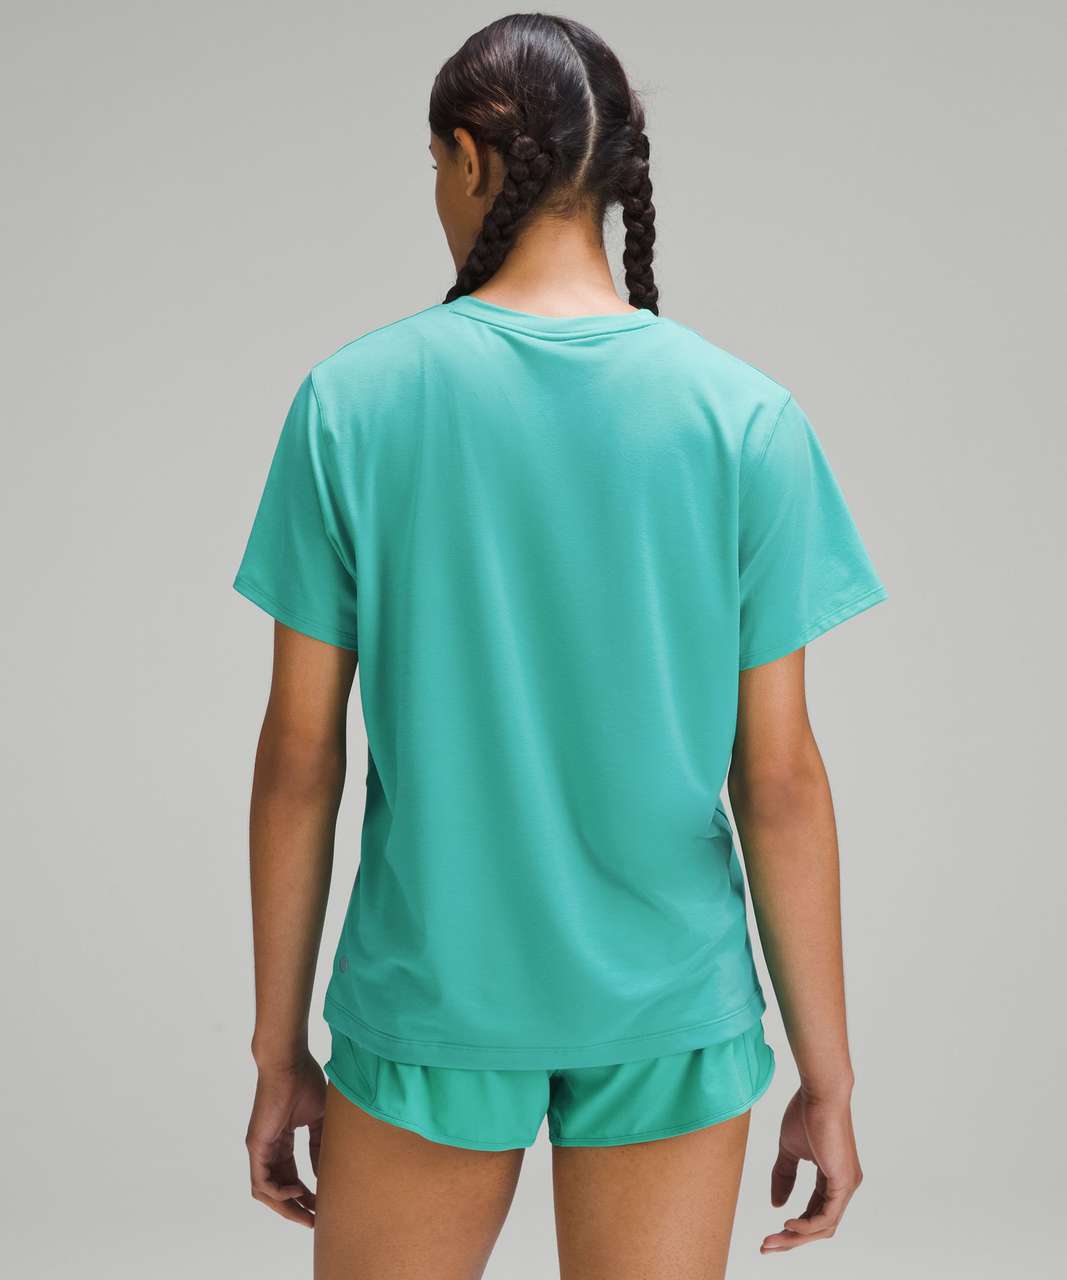 Lululemon Relaxed-Fit Running T-Shirt - Kelly Green